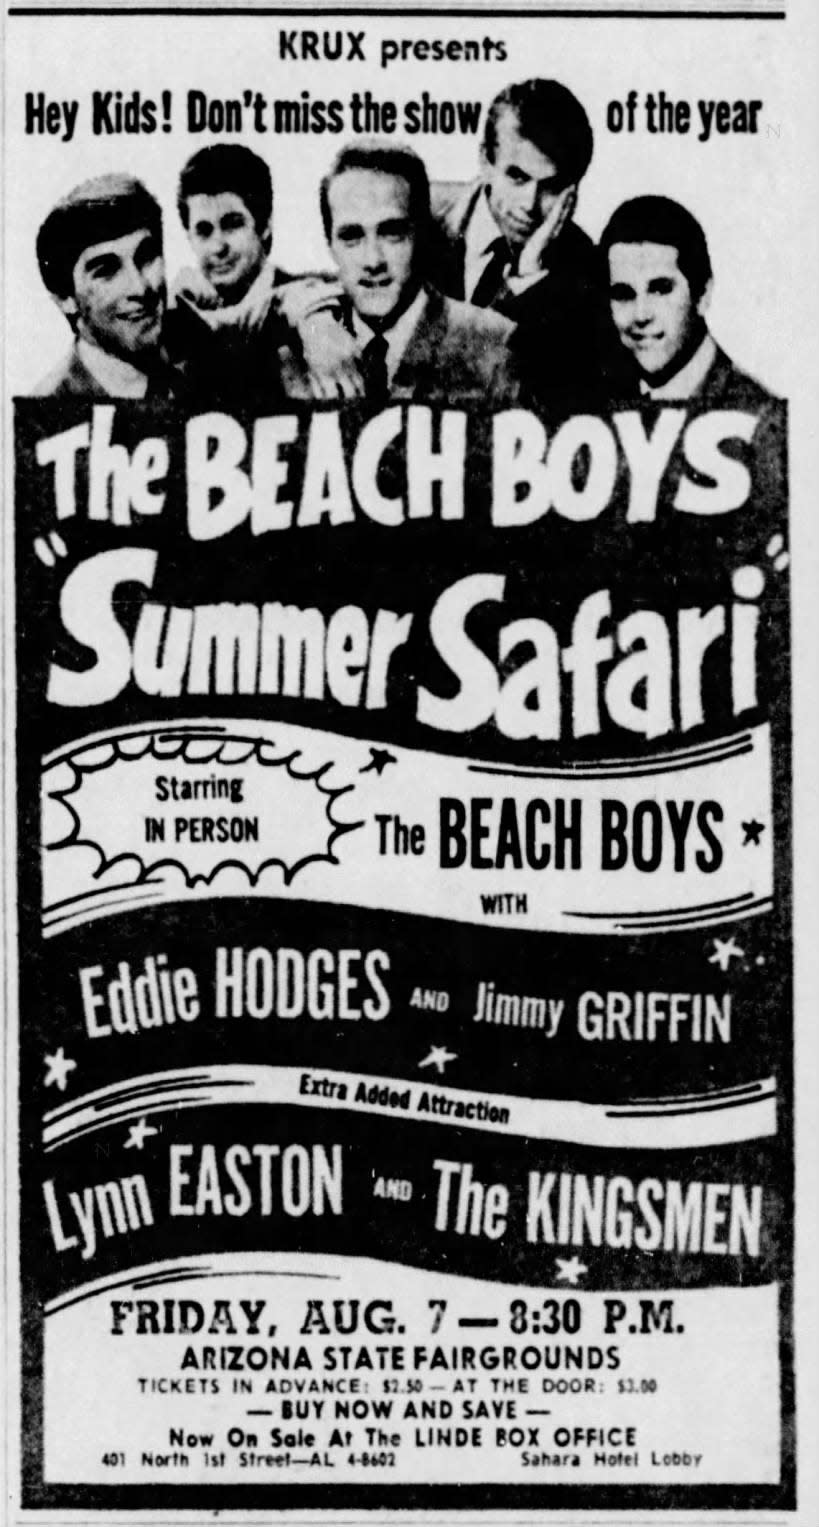 The Beach Boys Summer Safari ad as it appeared in The Arizona Republic on Aug. 2, 1964.